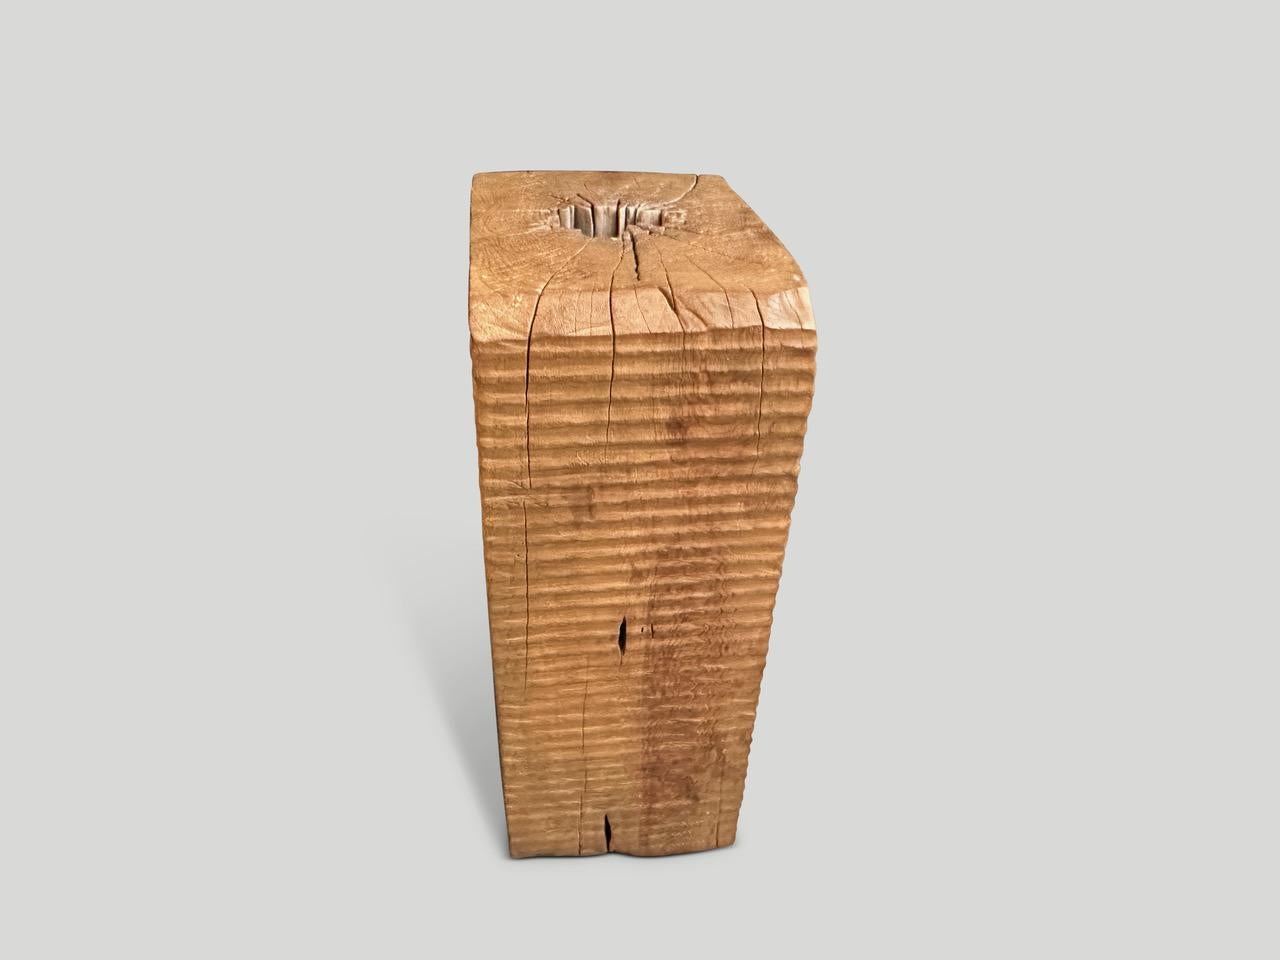 Andrianna Shamaris Hand Carved Teak Wood Bench or Pedestal For Sale 3